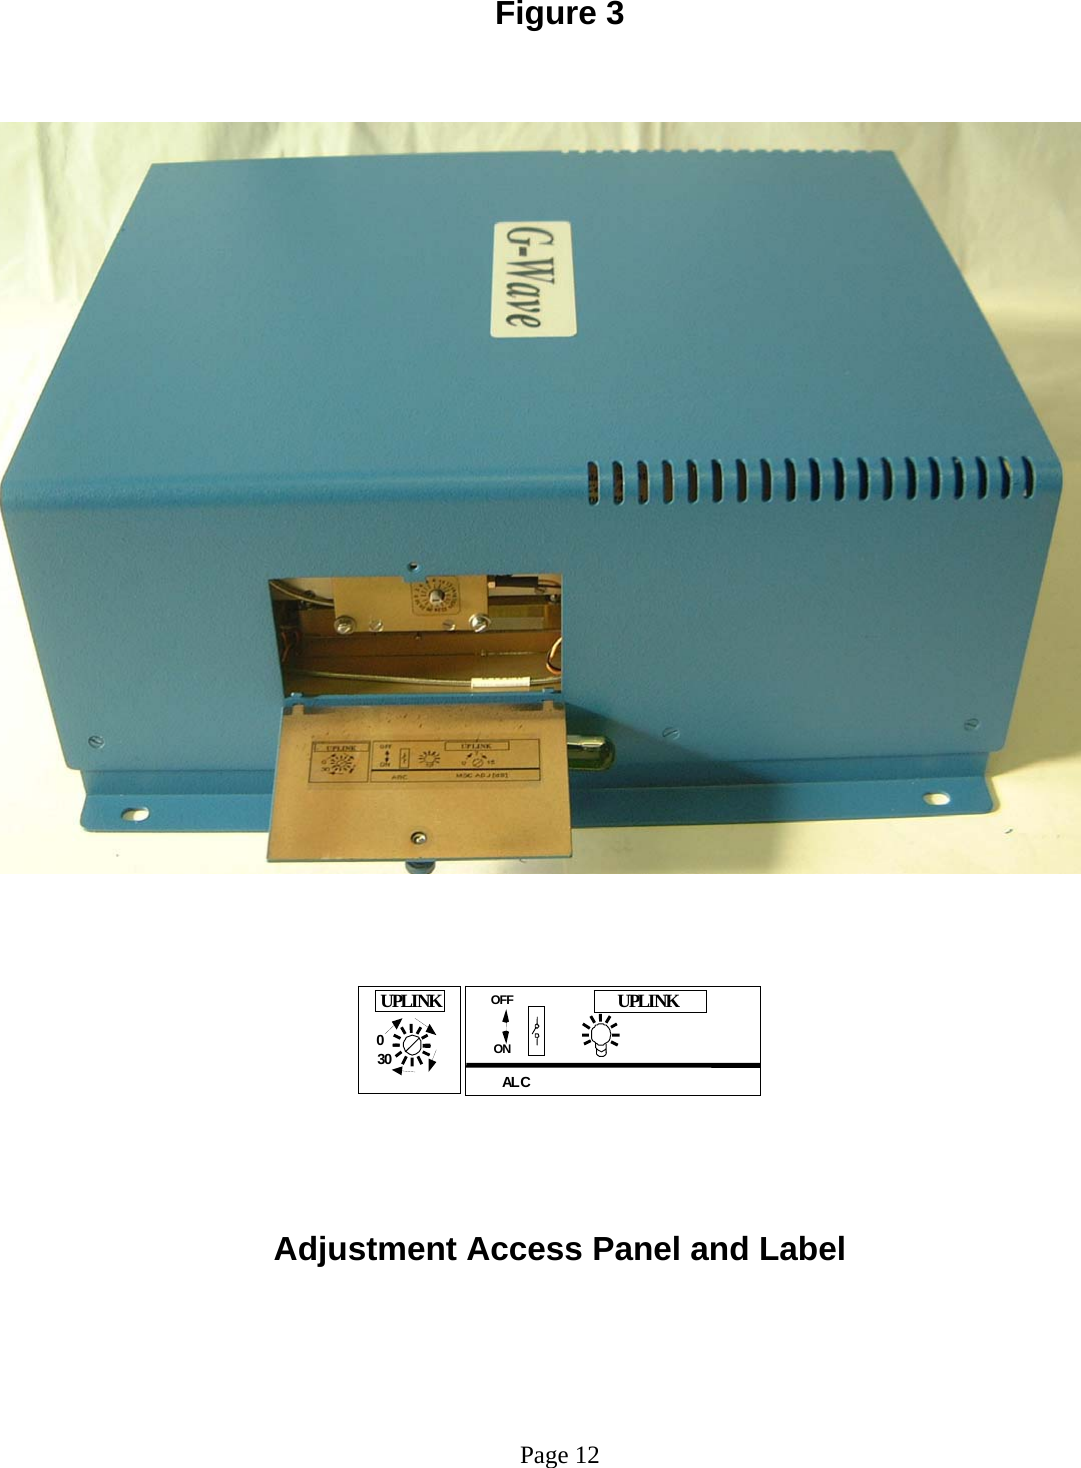 Figure 3         Adjustment Access Panel and Label       Page 12 ALCUPLINKOFFON0 3 0 U P LINK